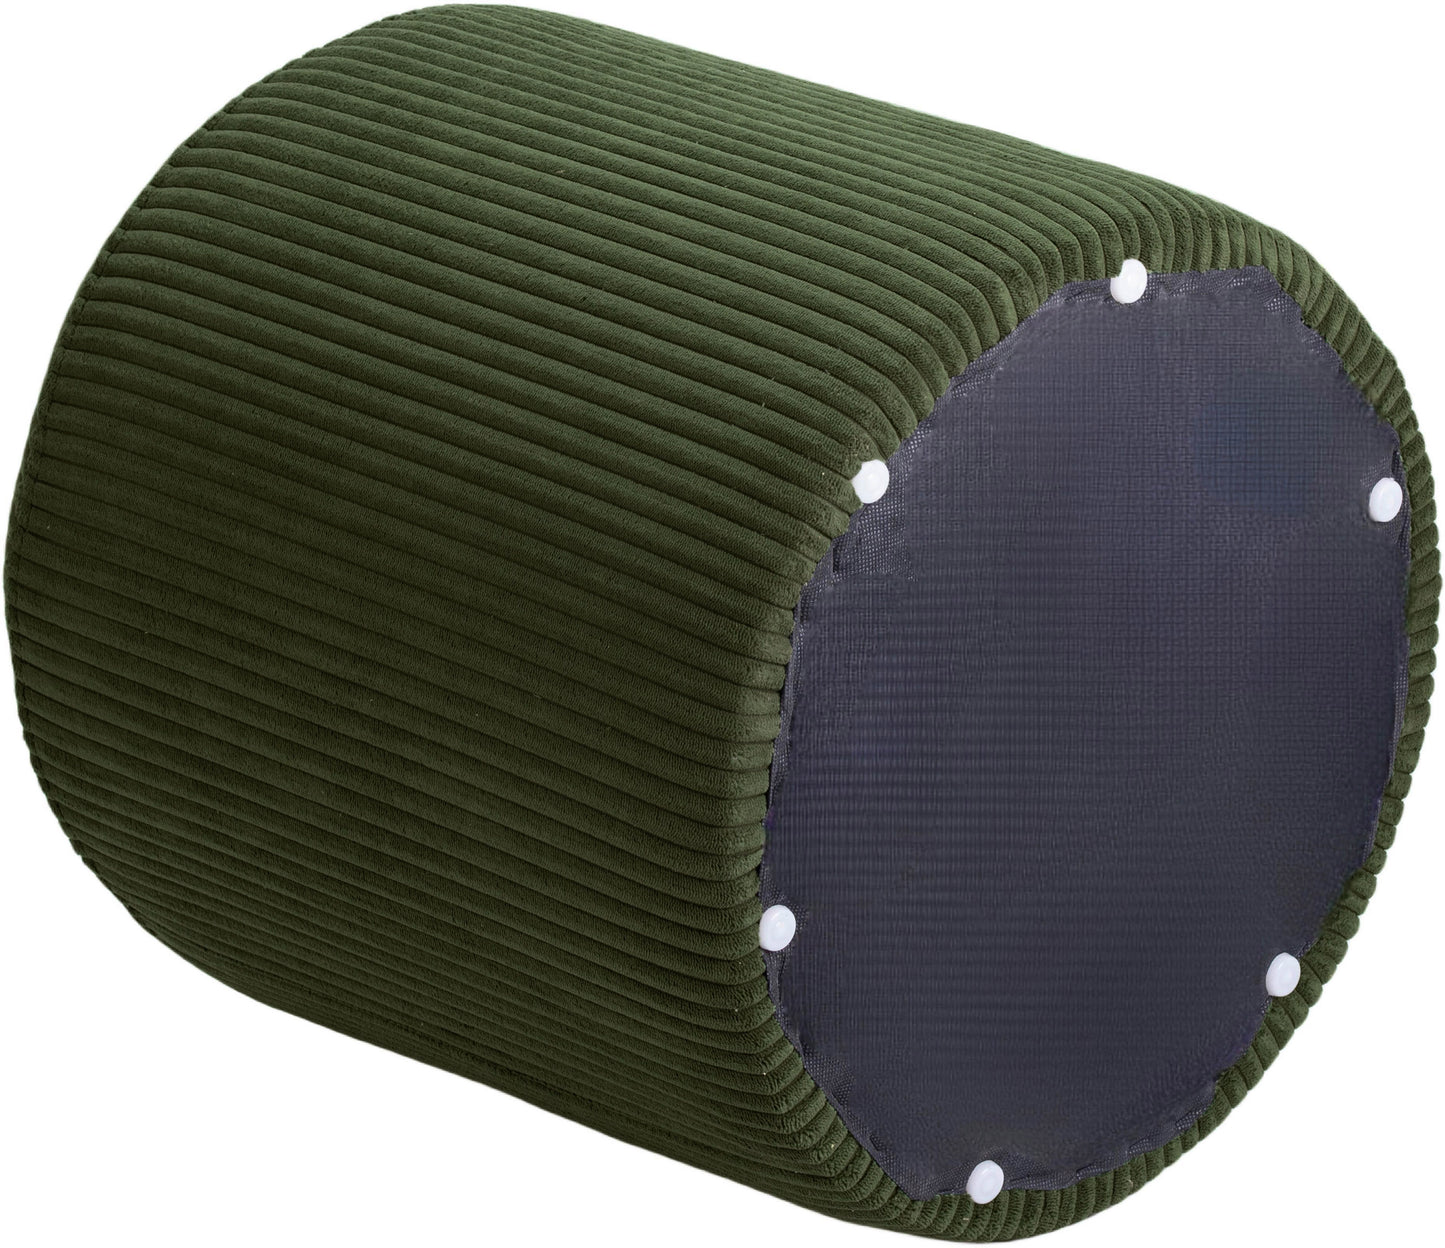 serafina green microsuede fabric ottoman/stool green